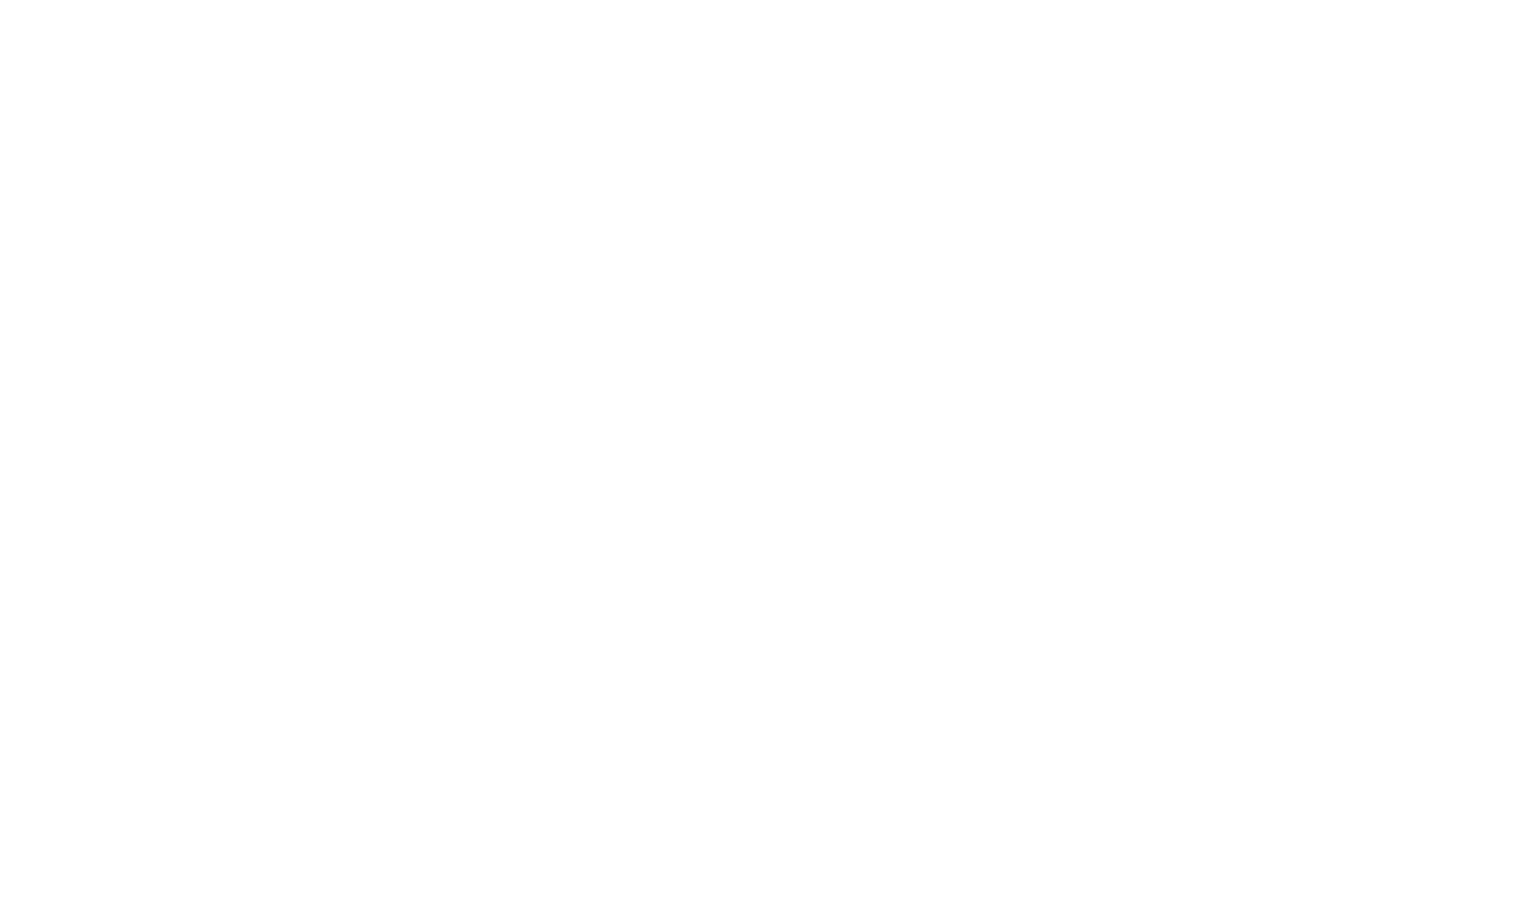 The Majid Al Futtaim Logo